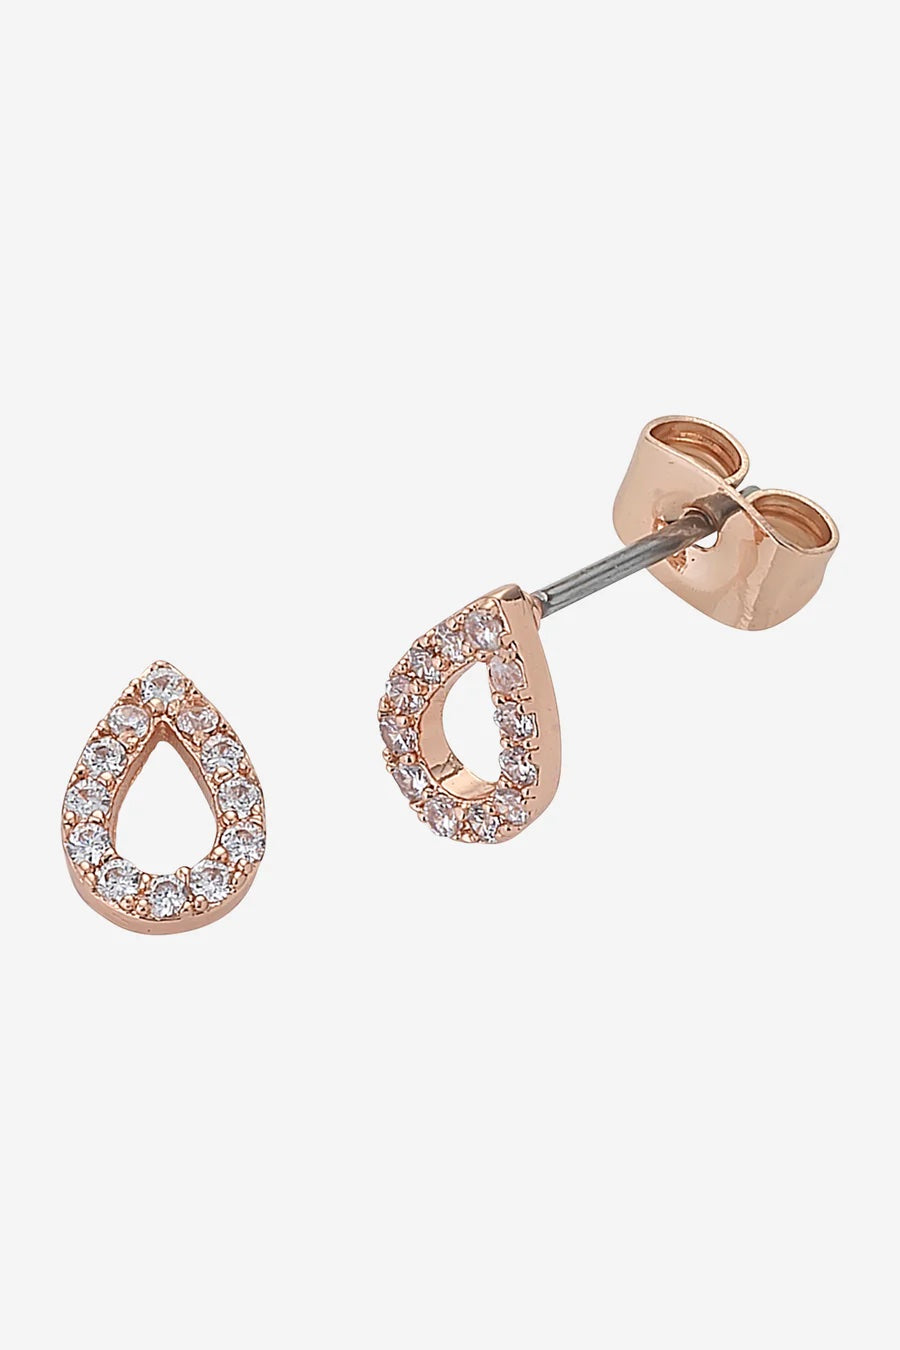 Petite Diamond Earrings Rose Gold